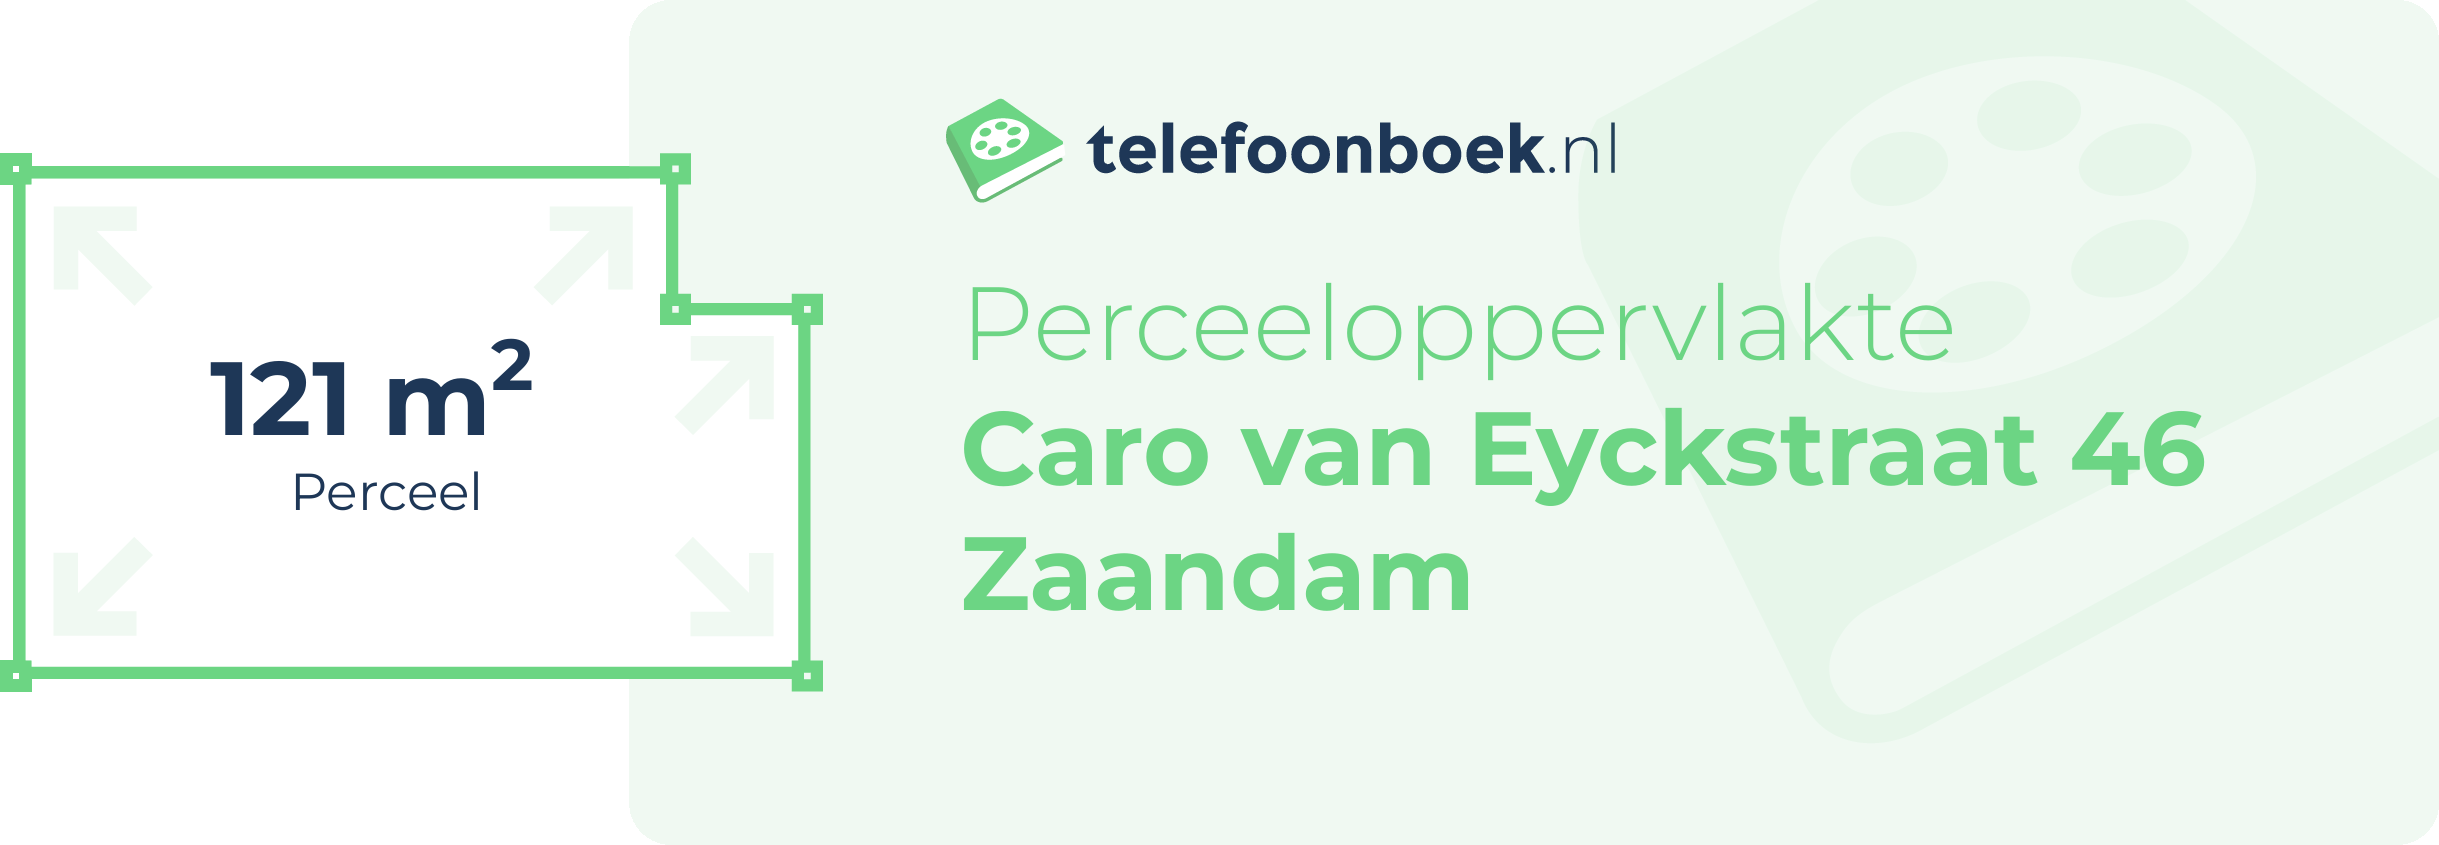 Perceeloppervlakte Caro Van Eyckstraat 46 Zaandam